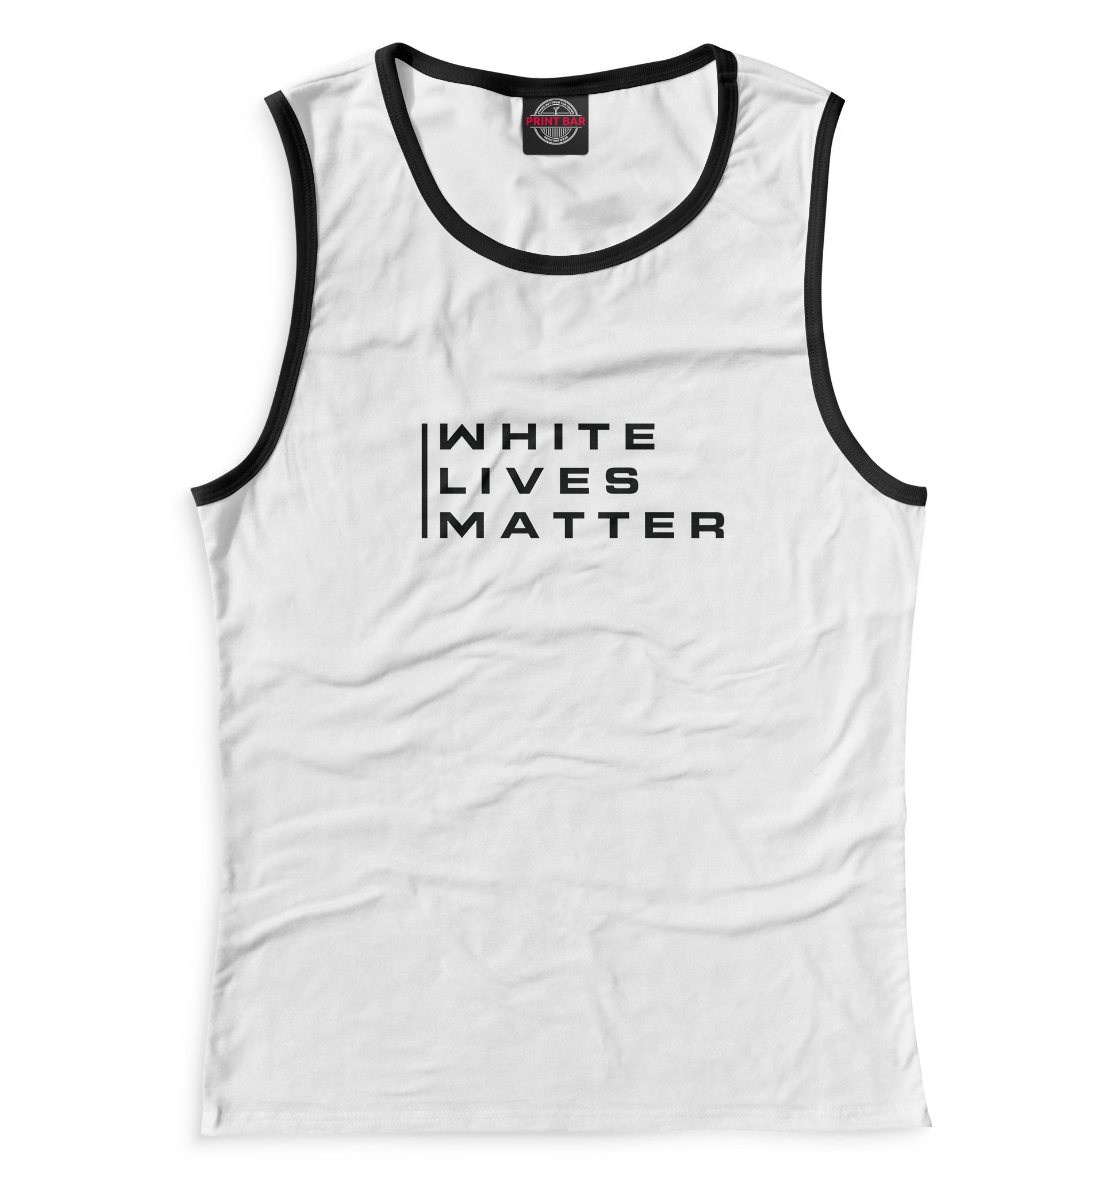 Женская Майка с надписью White lives matter, артикул NDP-493114-may-1mp